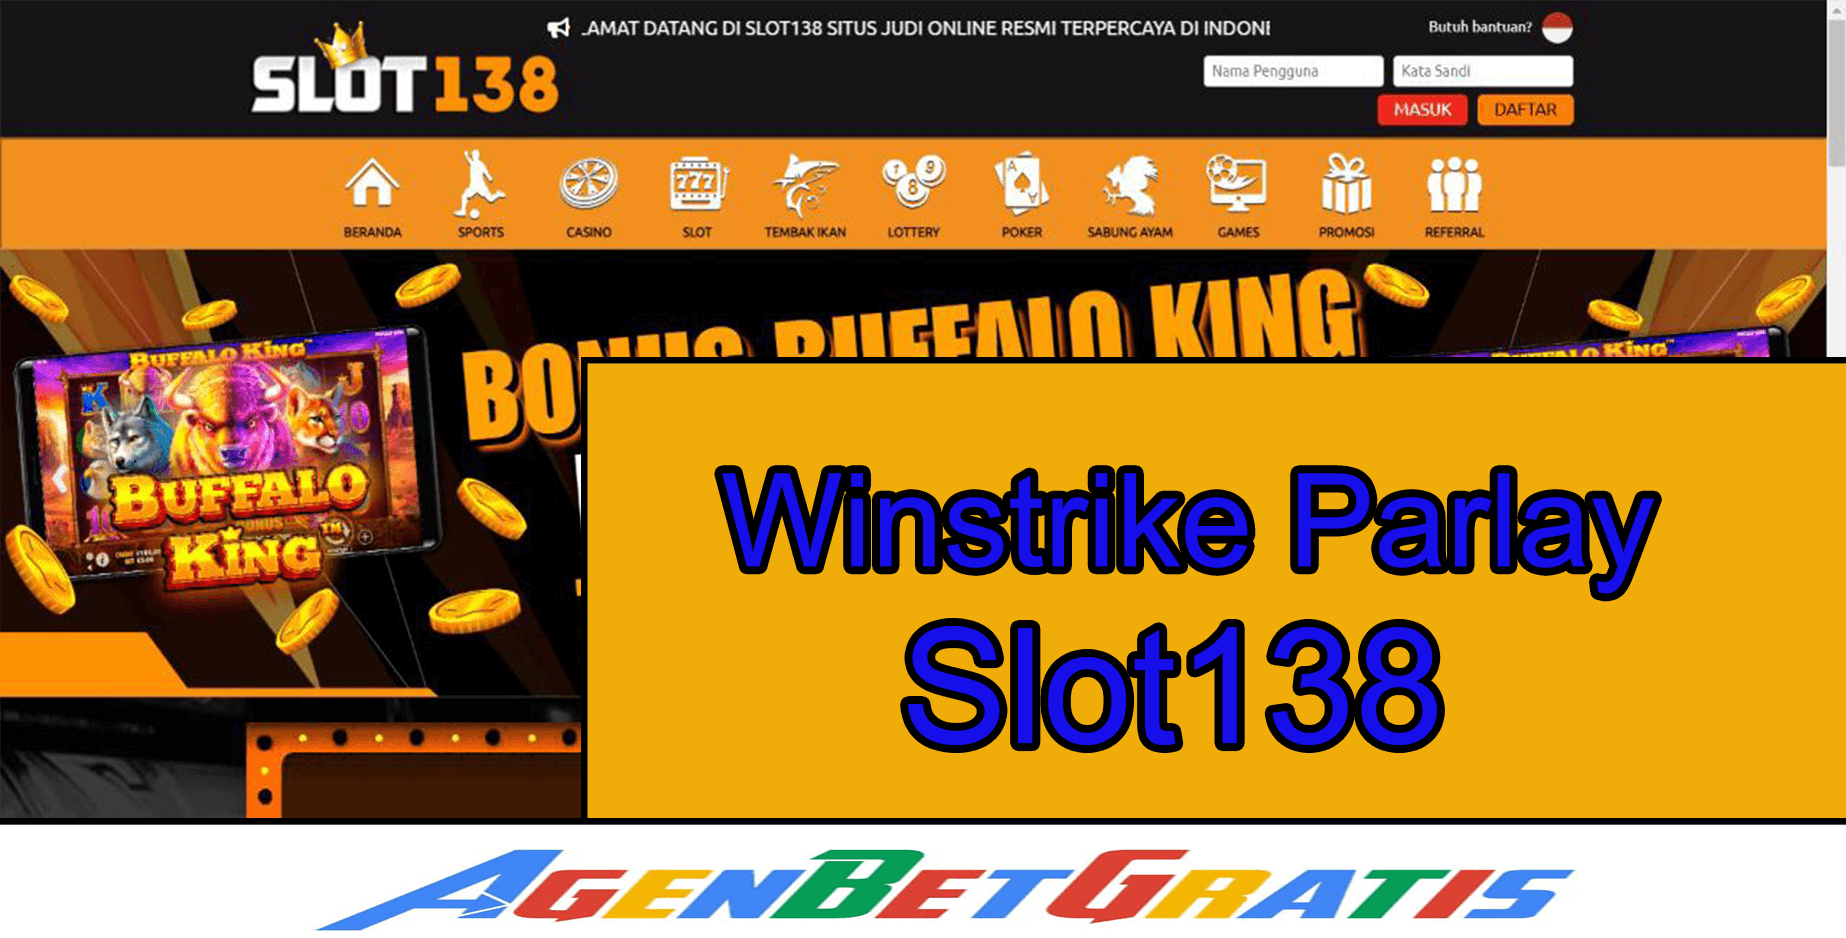 SLOT138 - Event Winstrike Parlay